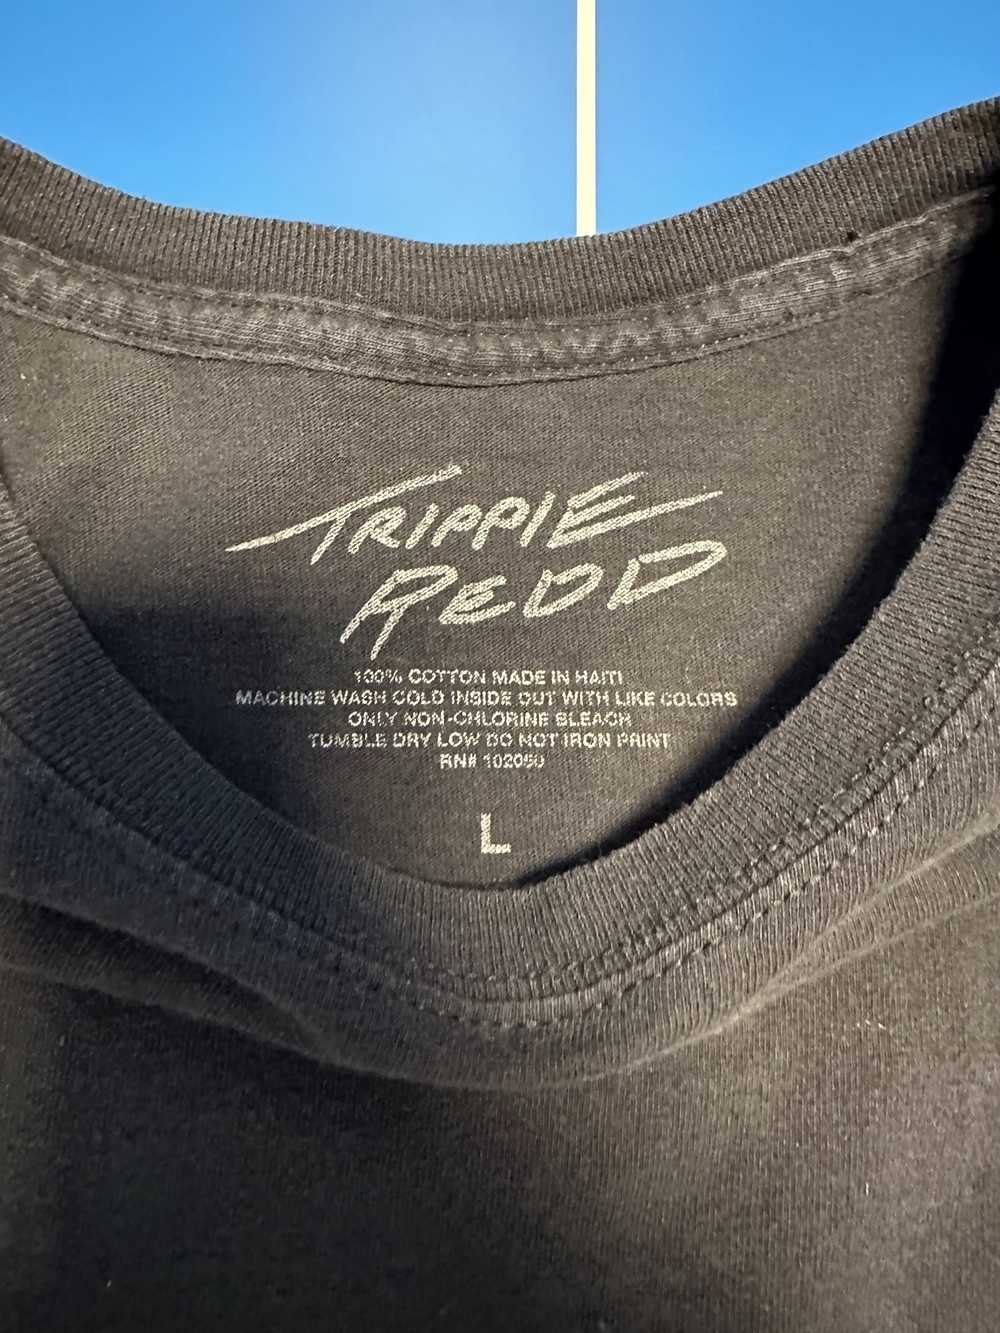 Trippie Redd lifes a trip - image 3